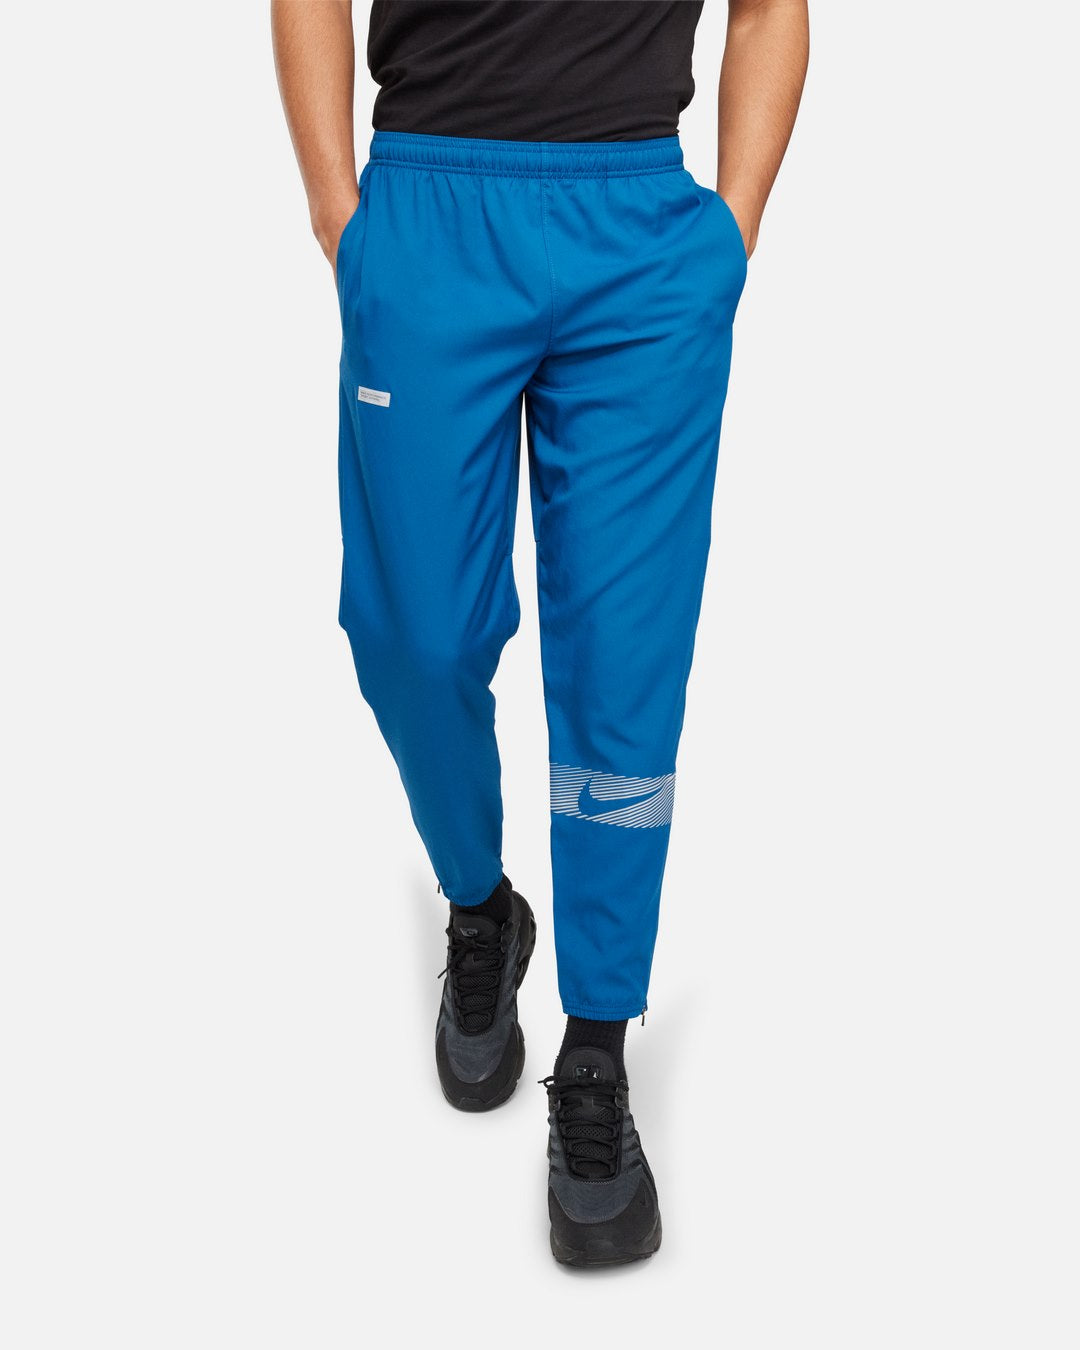 Nike Challenger Flash Pants - Blue